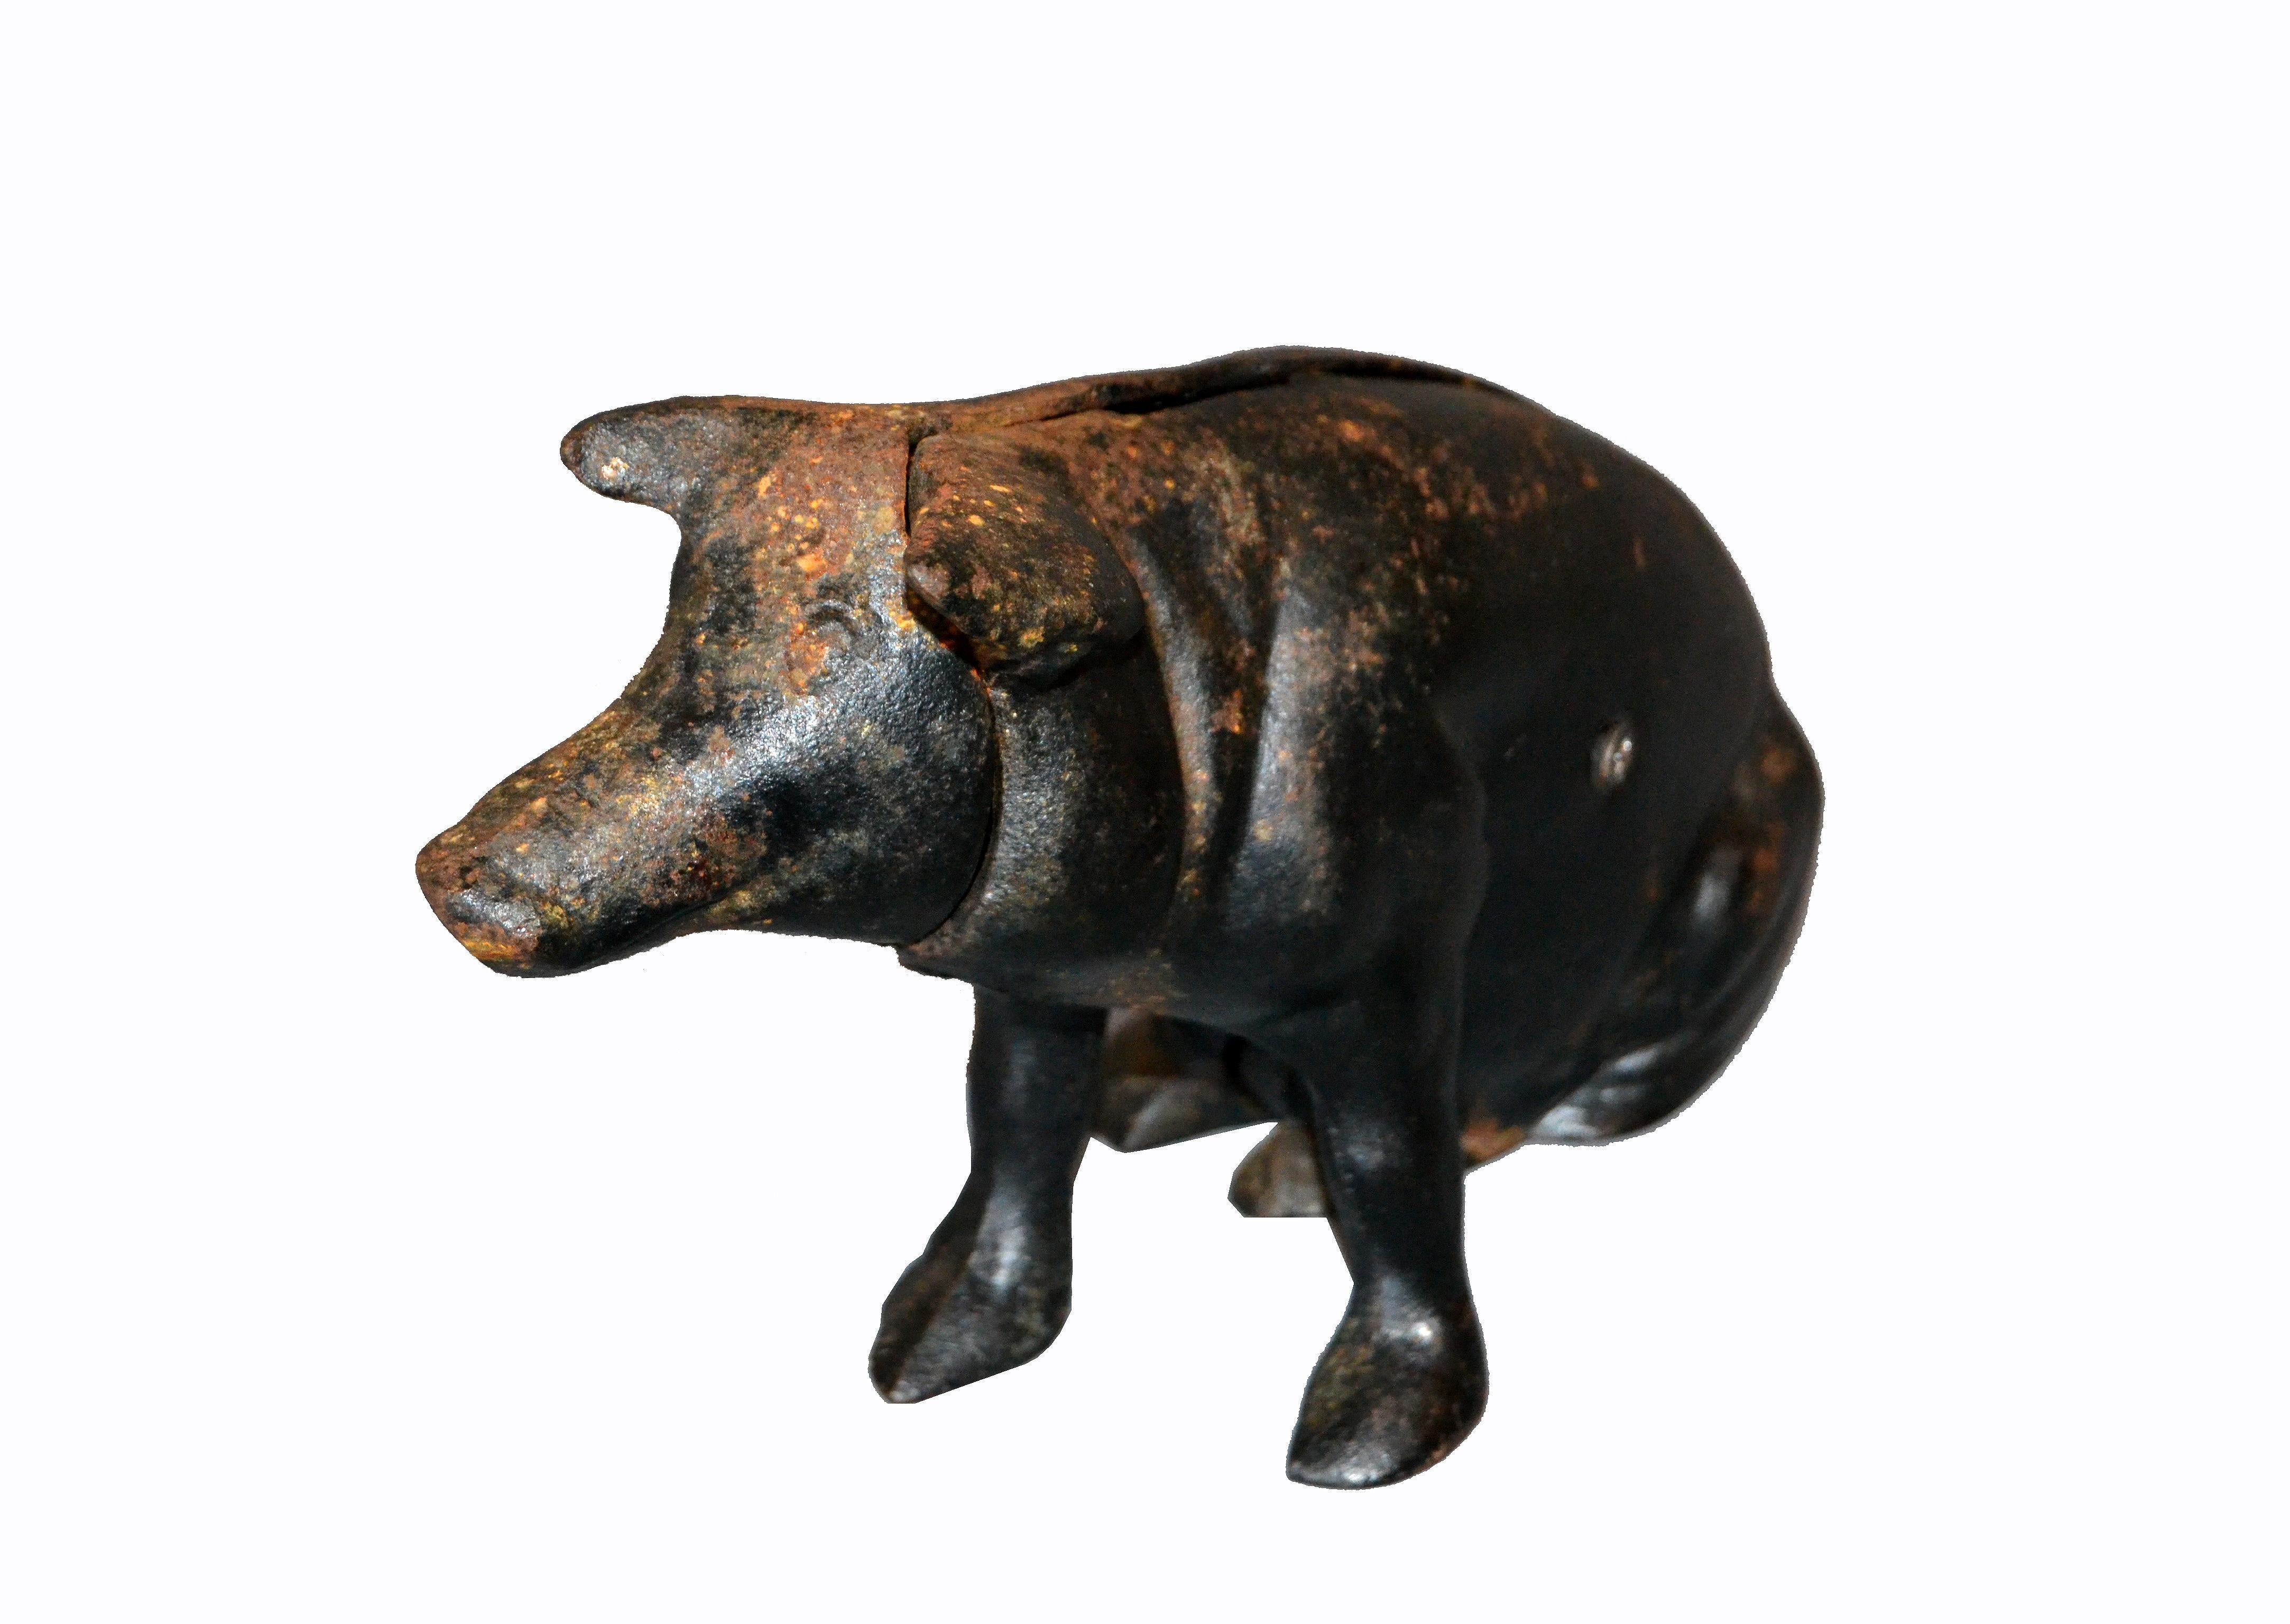 cast iron pig bank